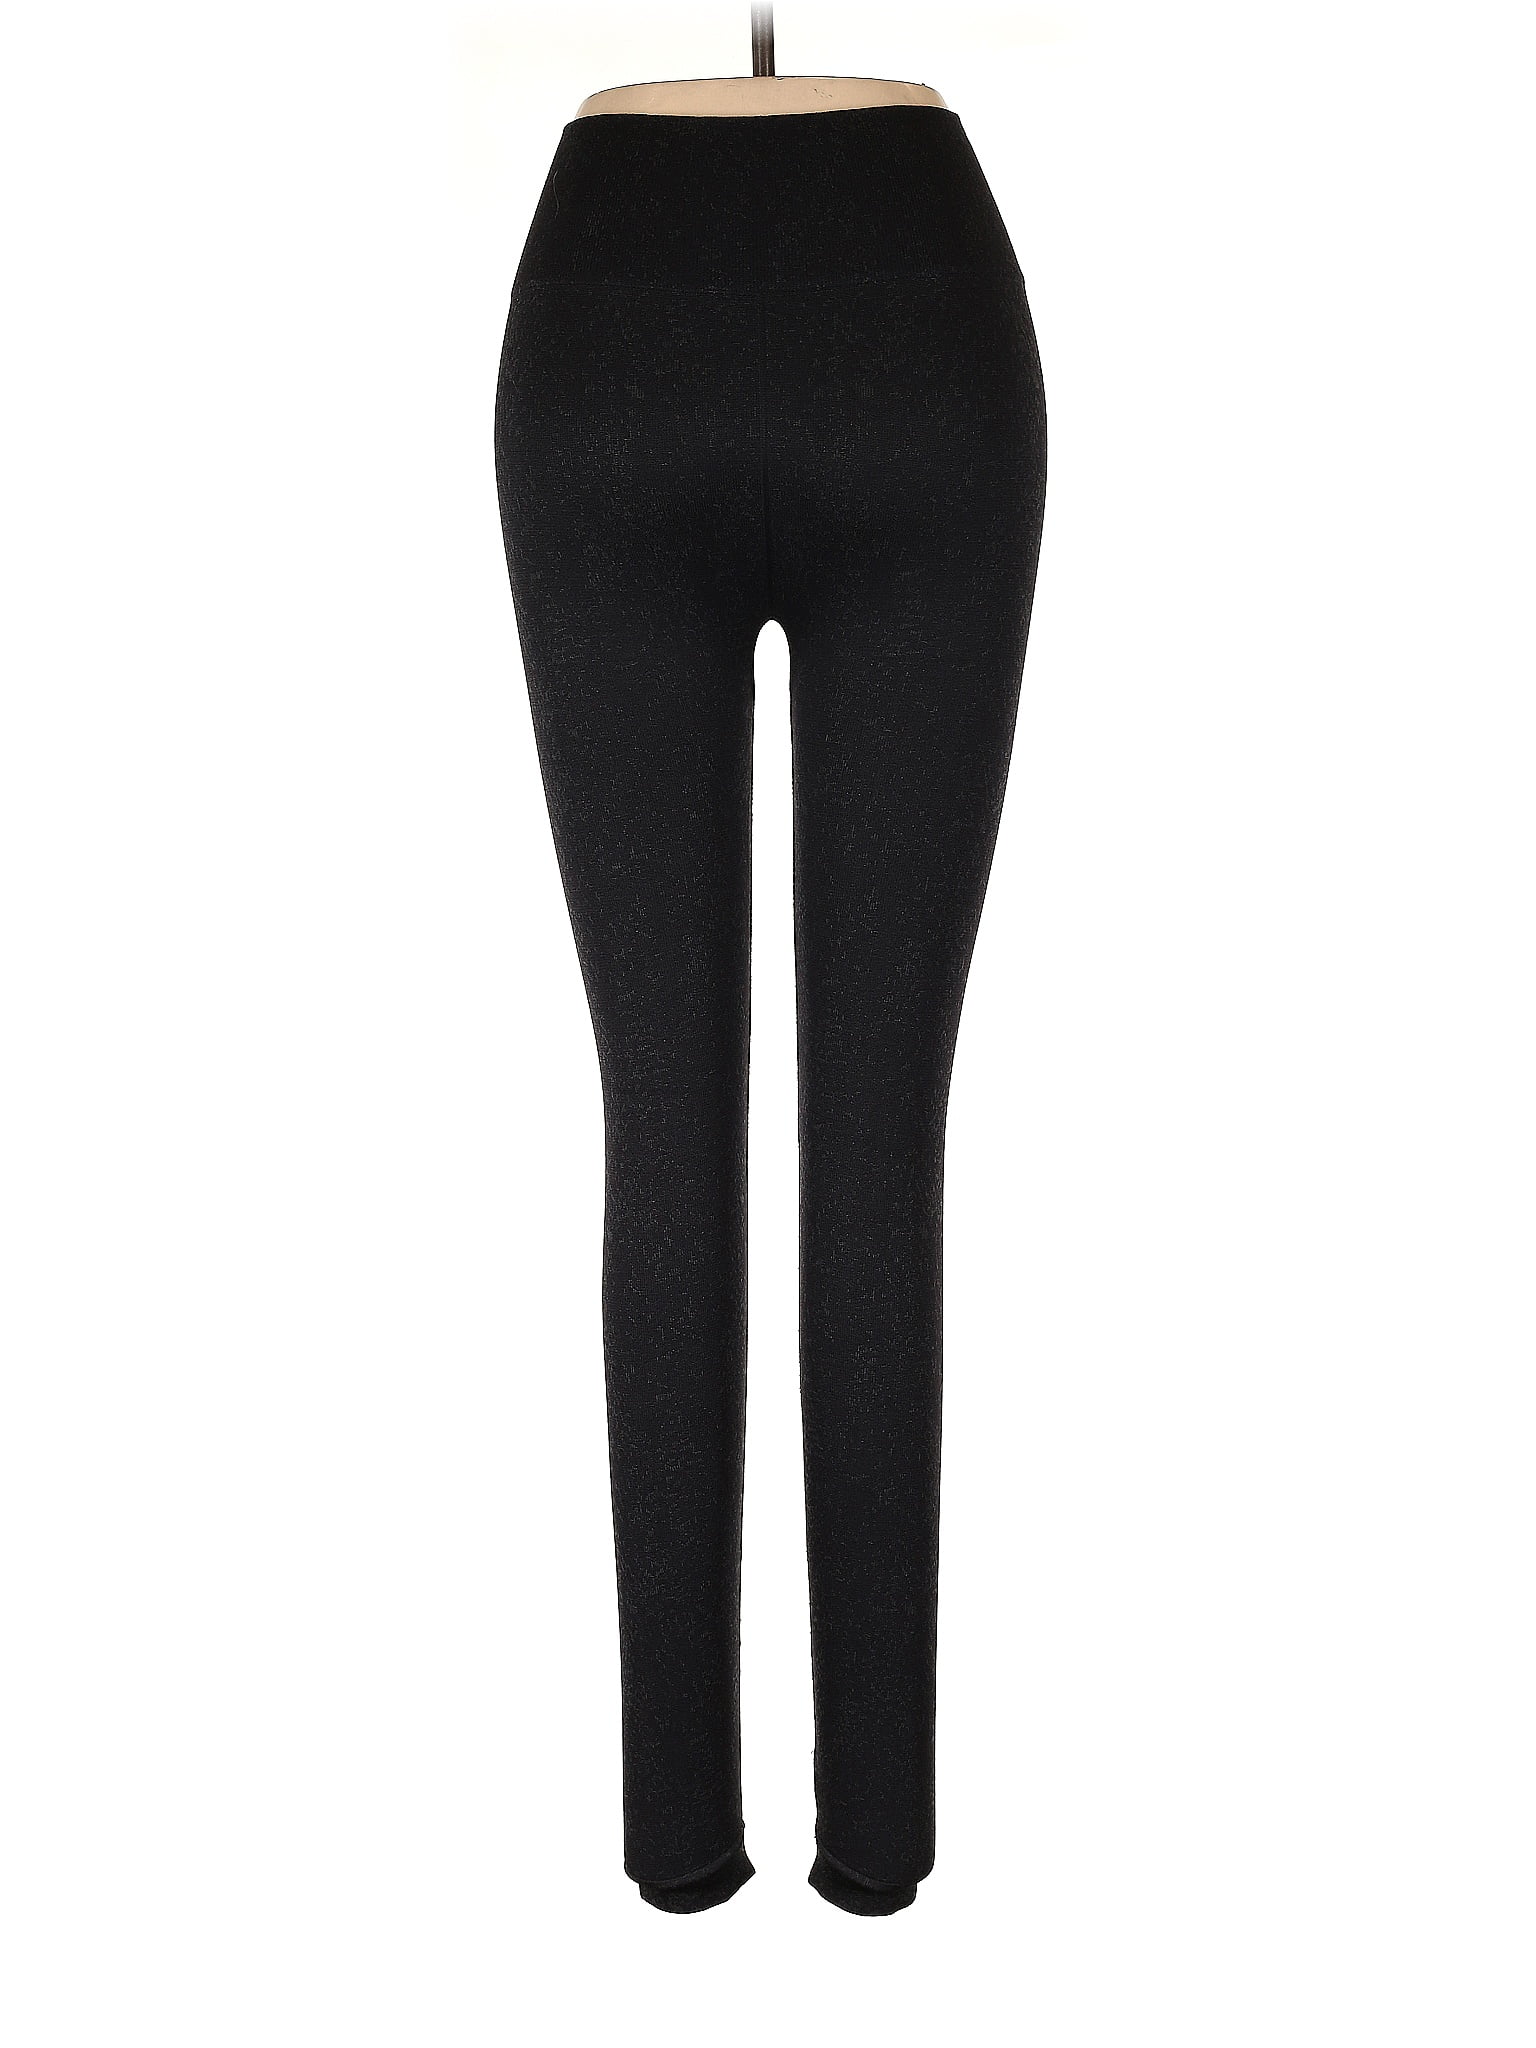 OFFLINE by Aerie Black Active Pants Size XL - 64% off